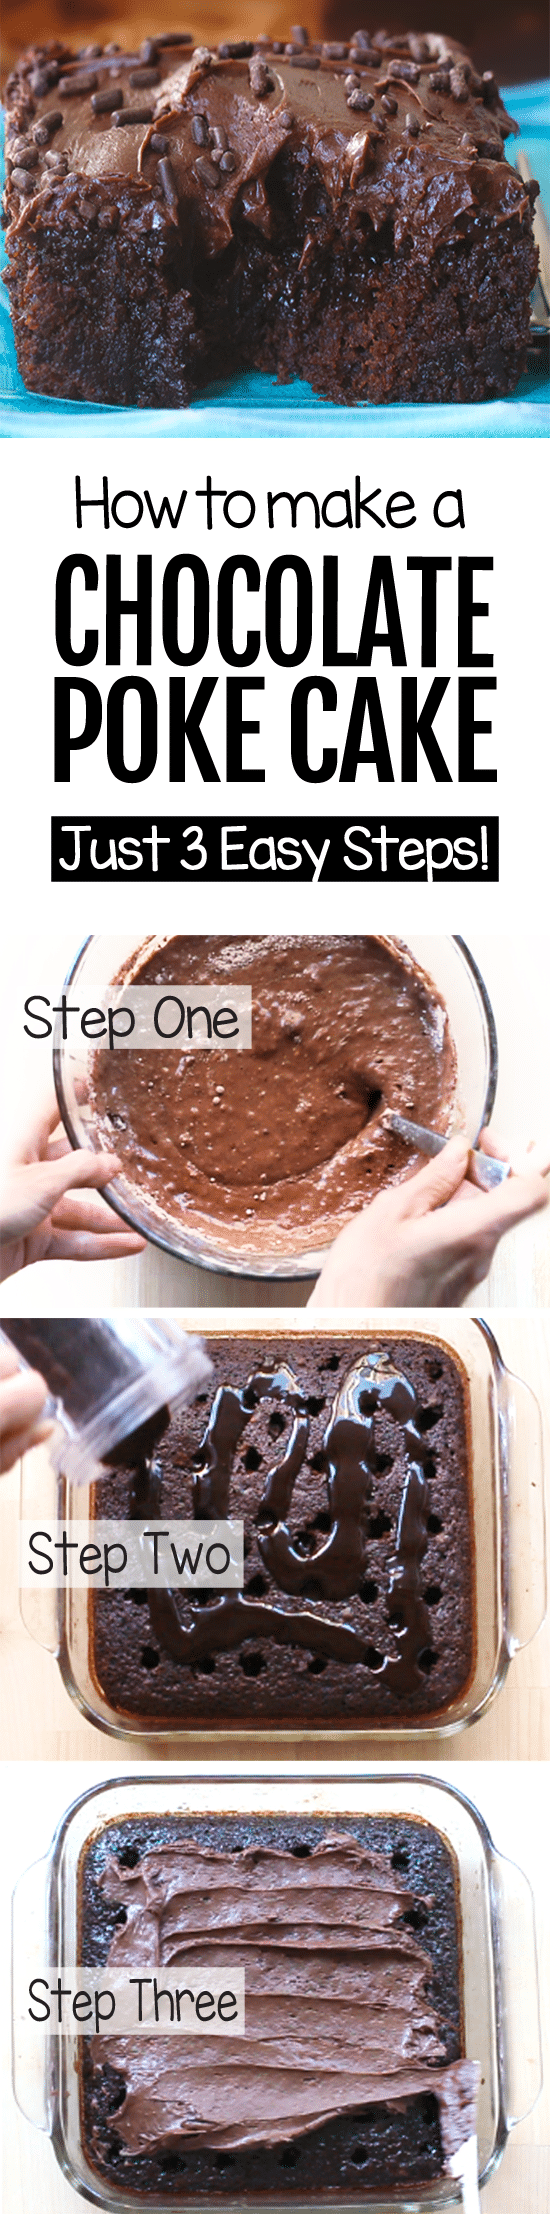 How To Make A Chocolate Poke Cake Recipe The EASY Way